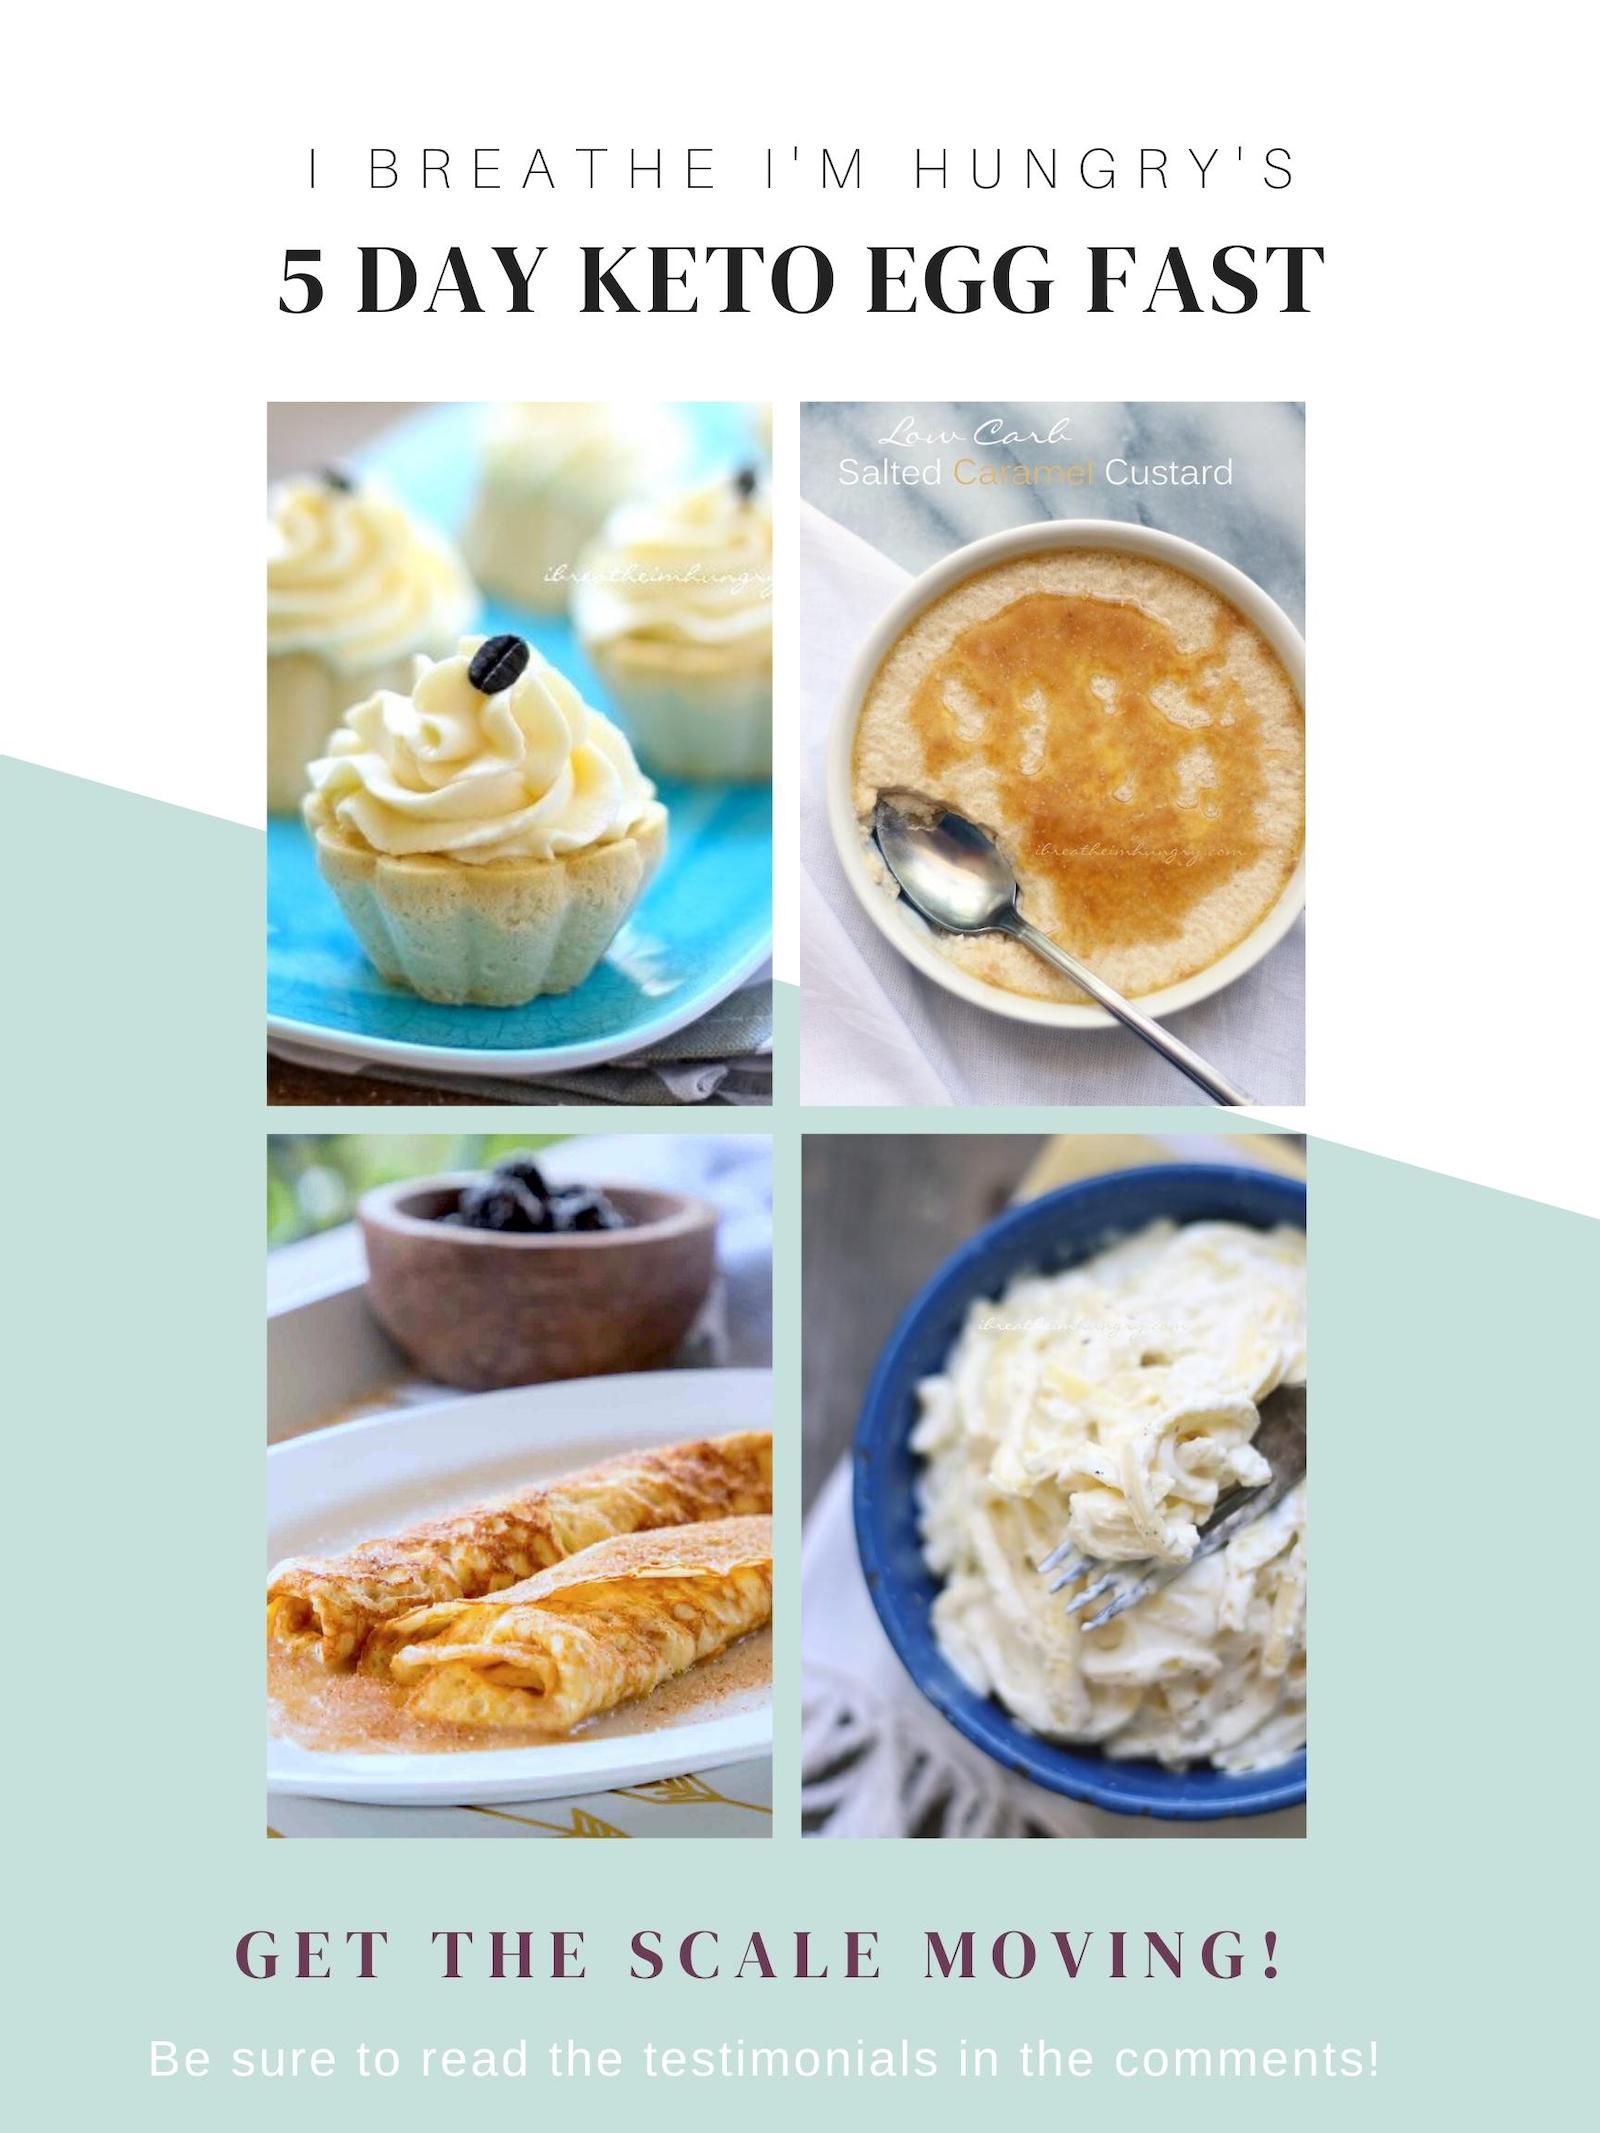 5 Day Keto Egg Fast Diet Plan infographic